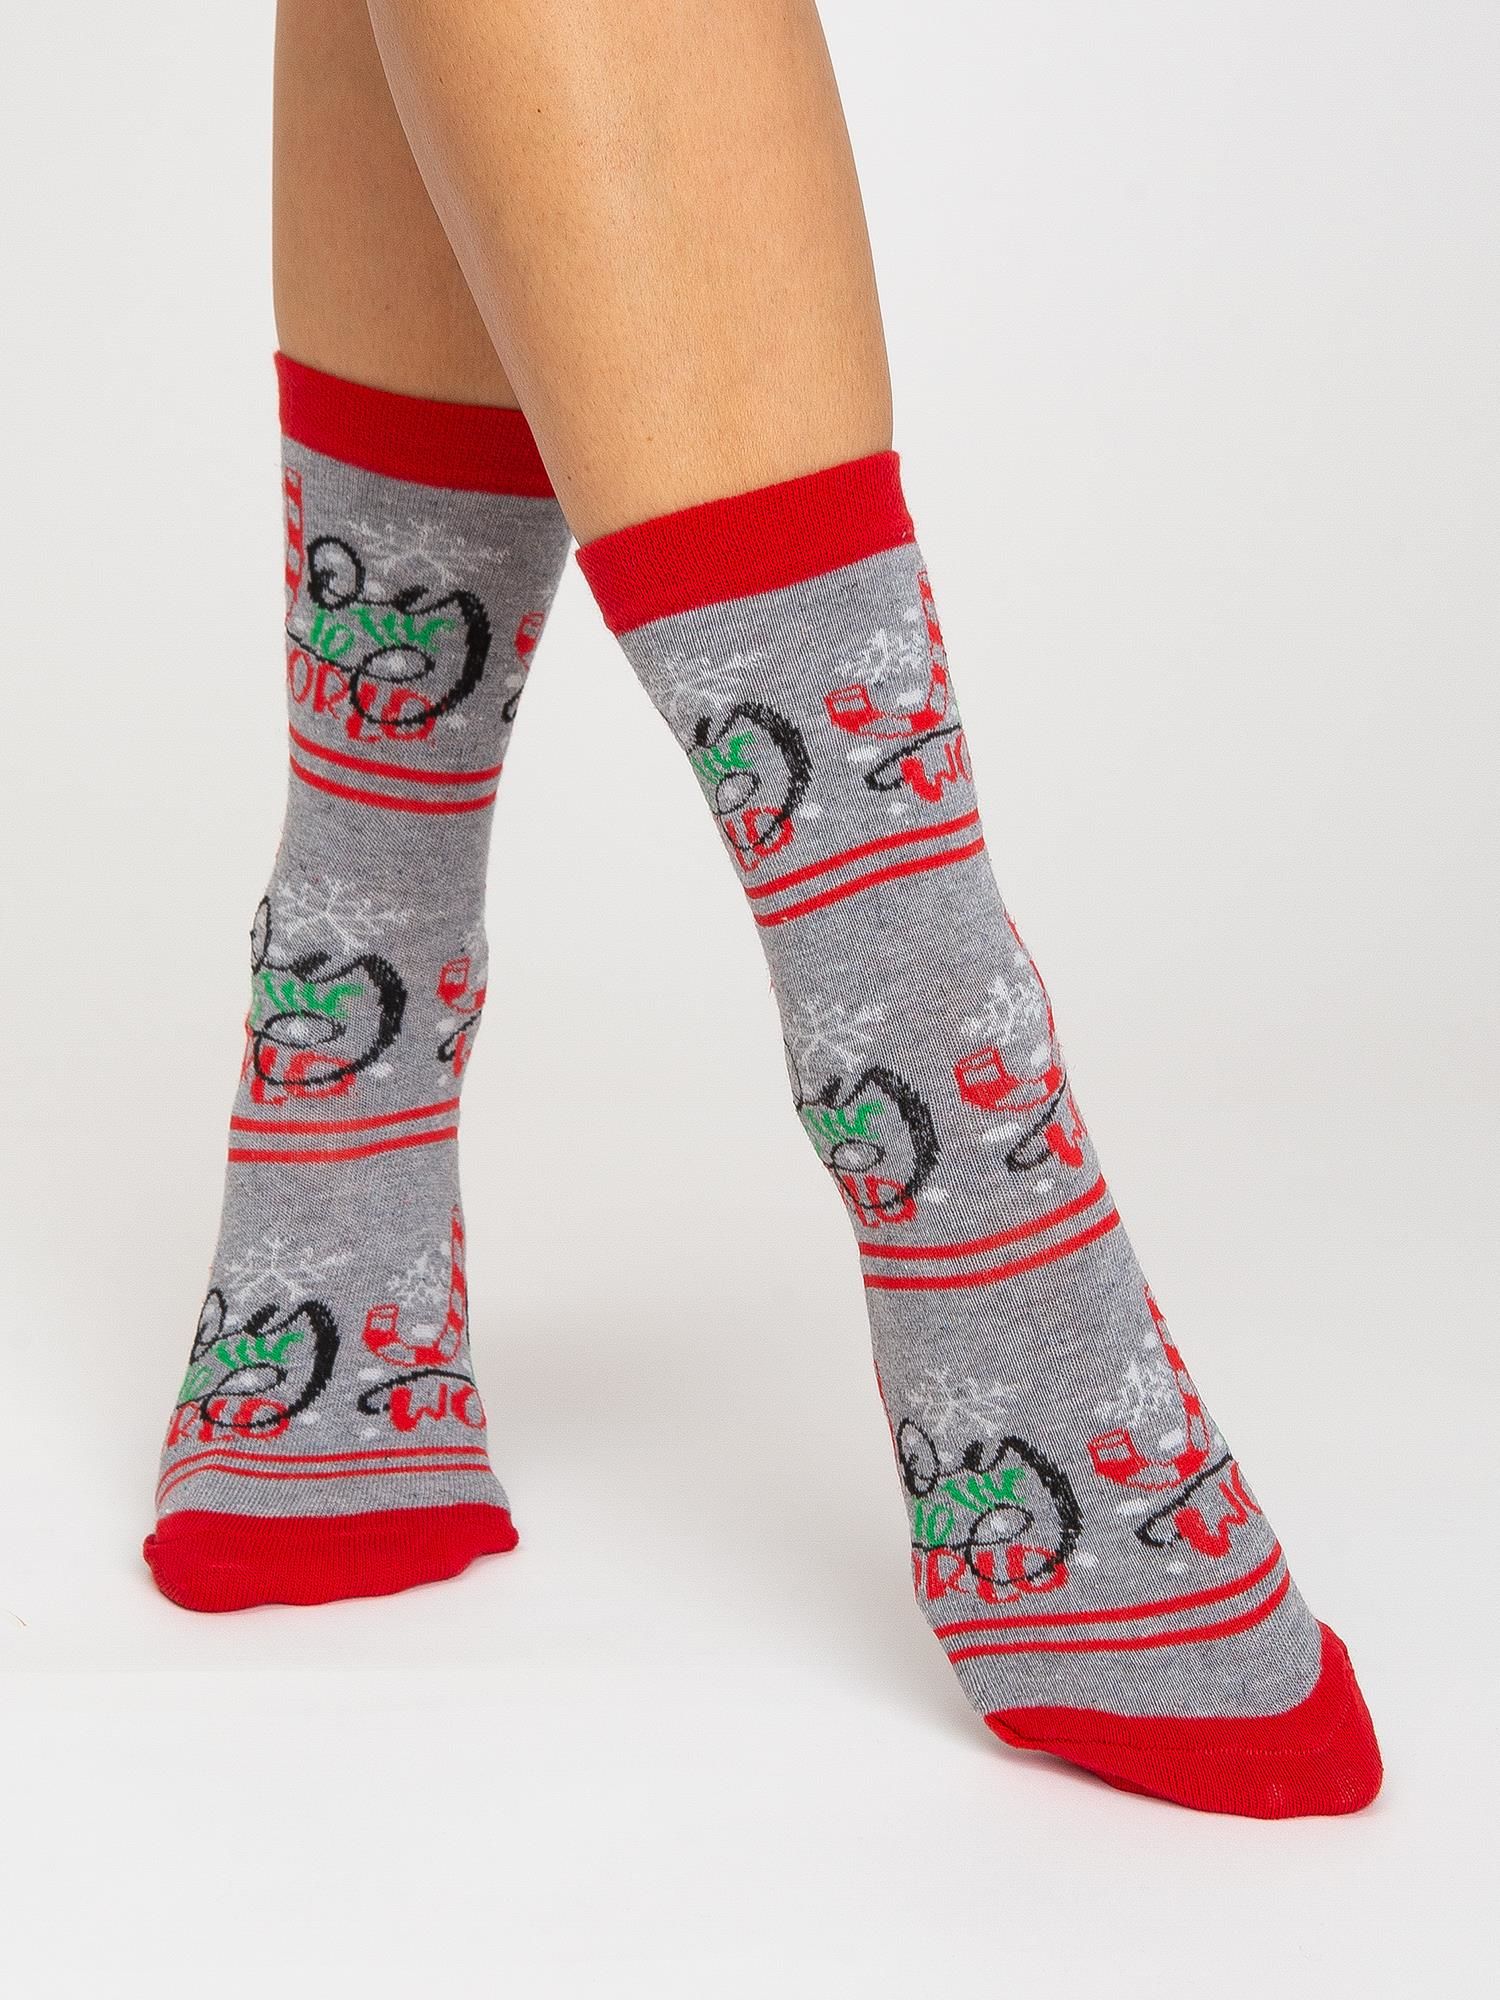 3 darabos karácsonyi zokni